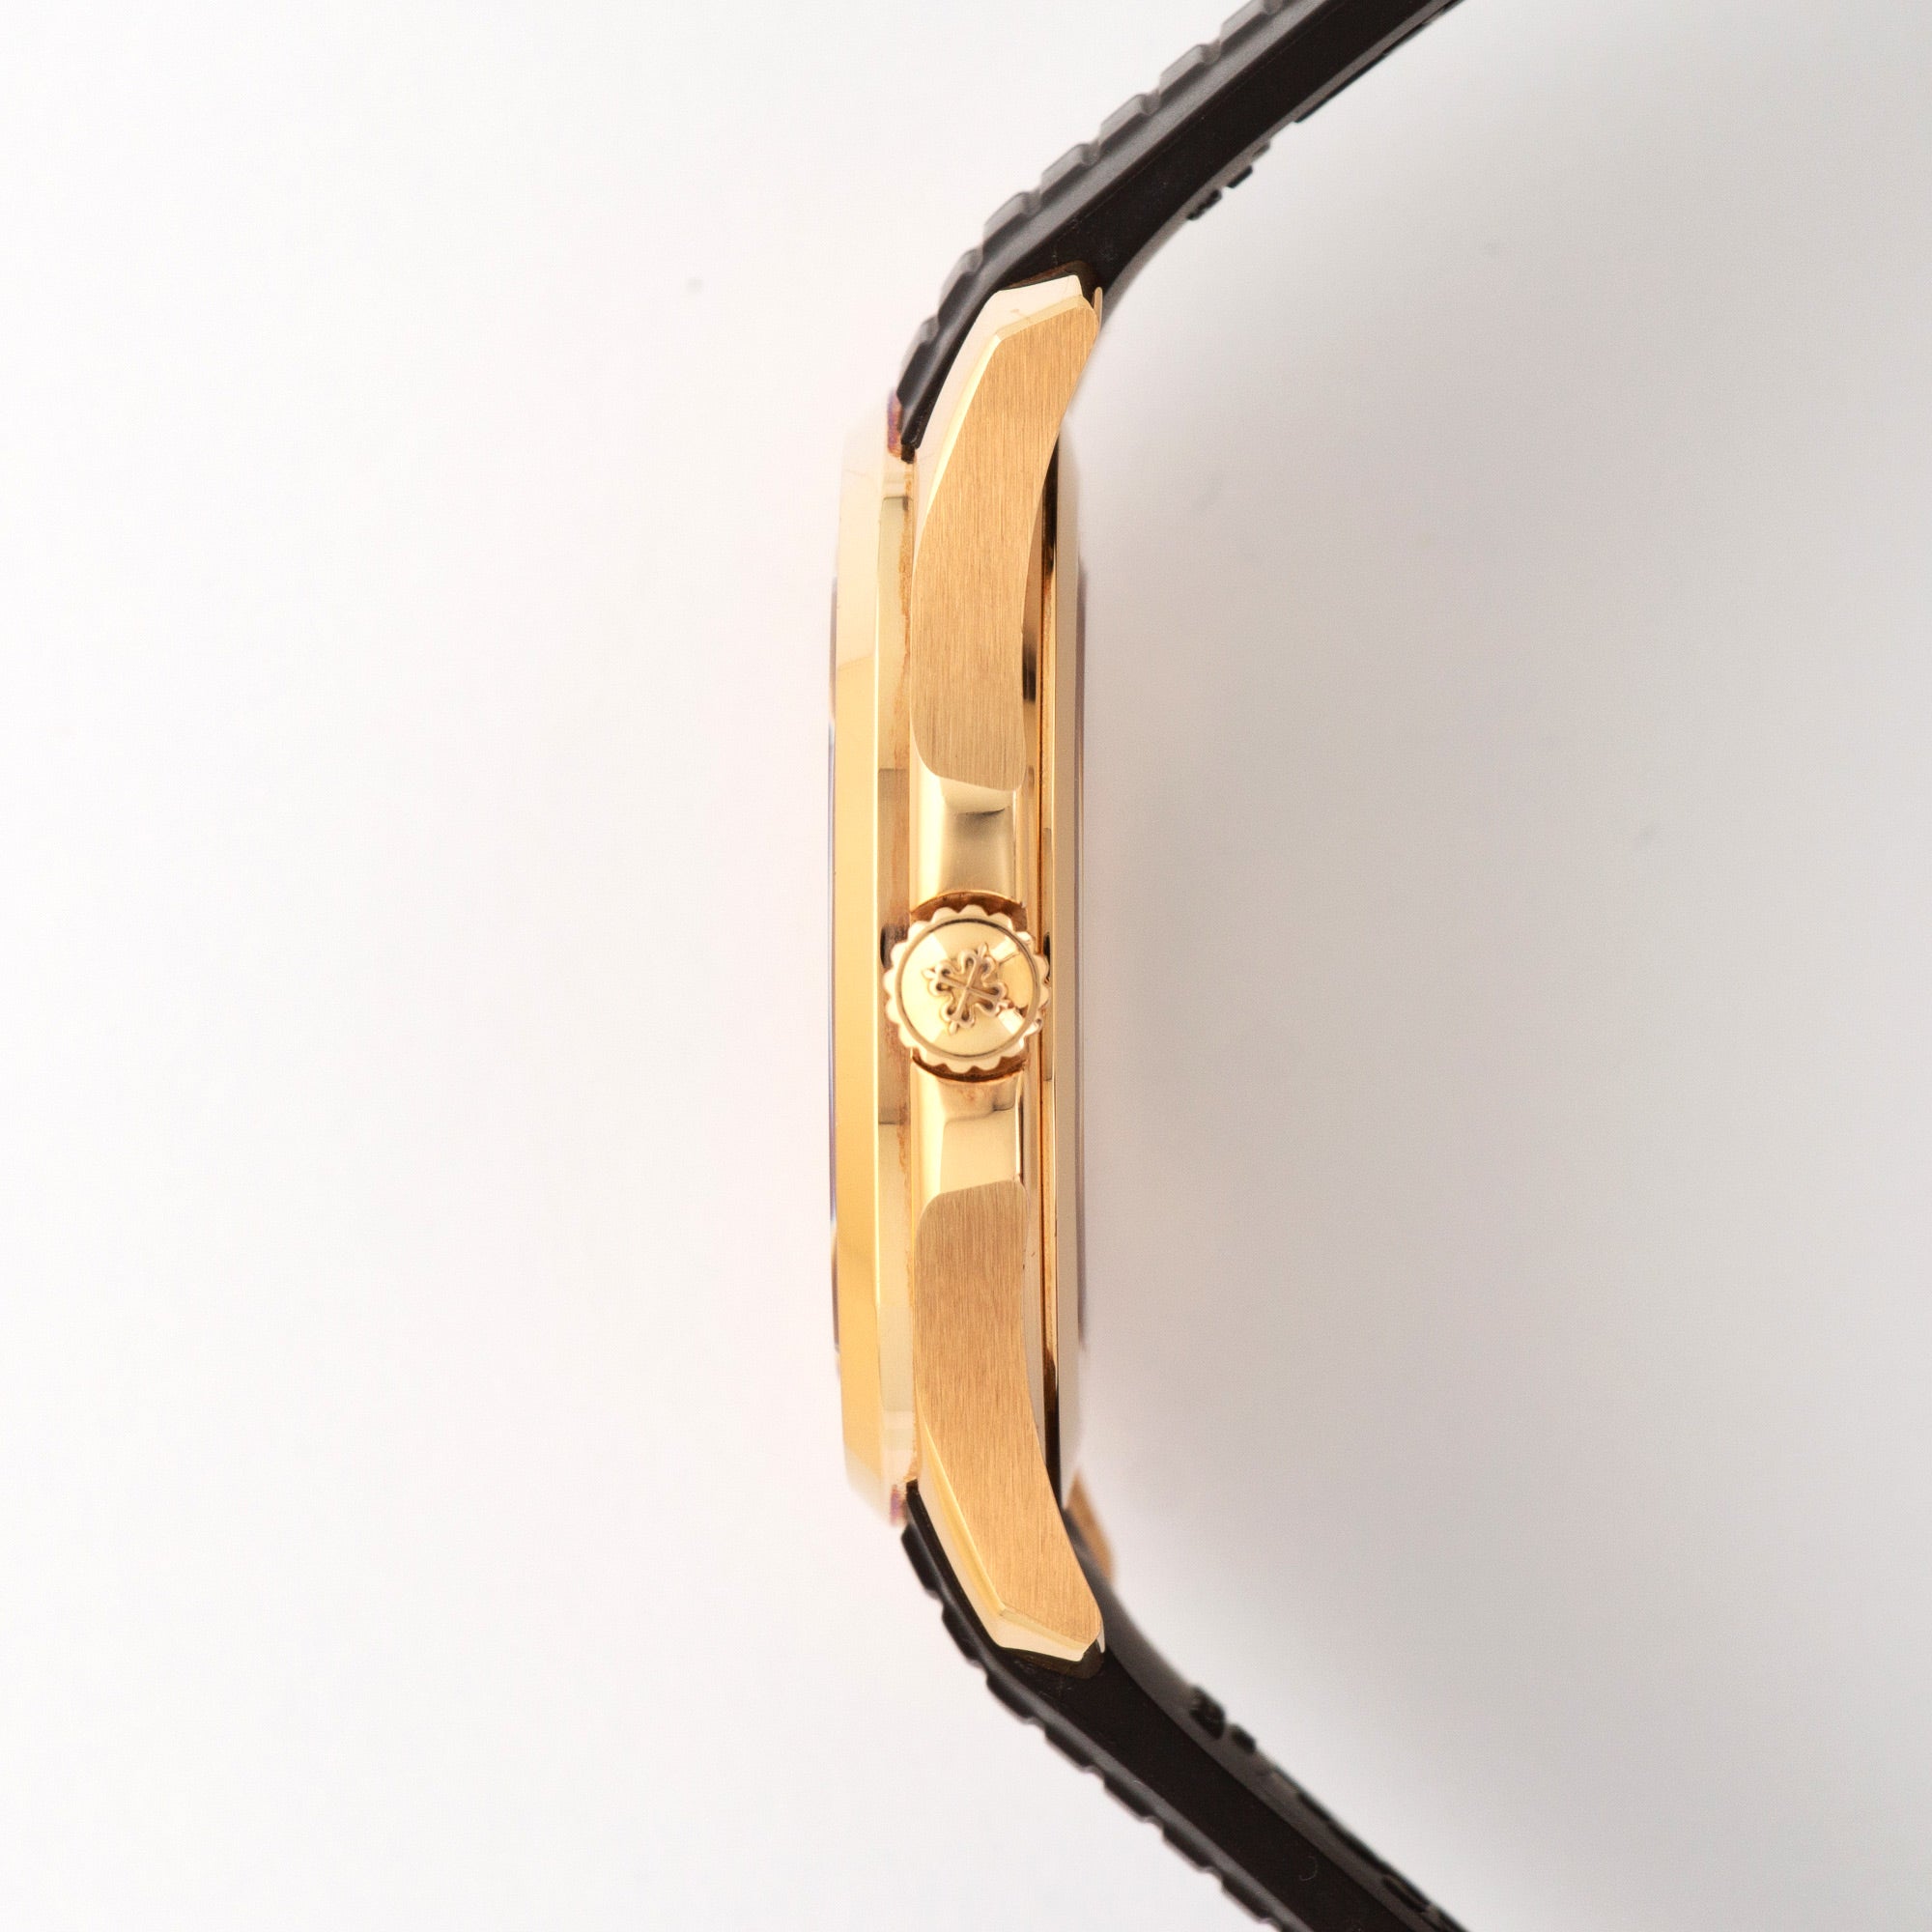 Patek Philippe - Patek Philippe Aquanaut Rose Gold on Strap Ref. 5167R - The Keystone Watches